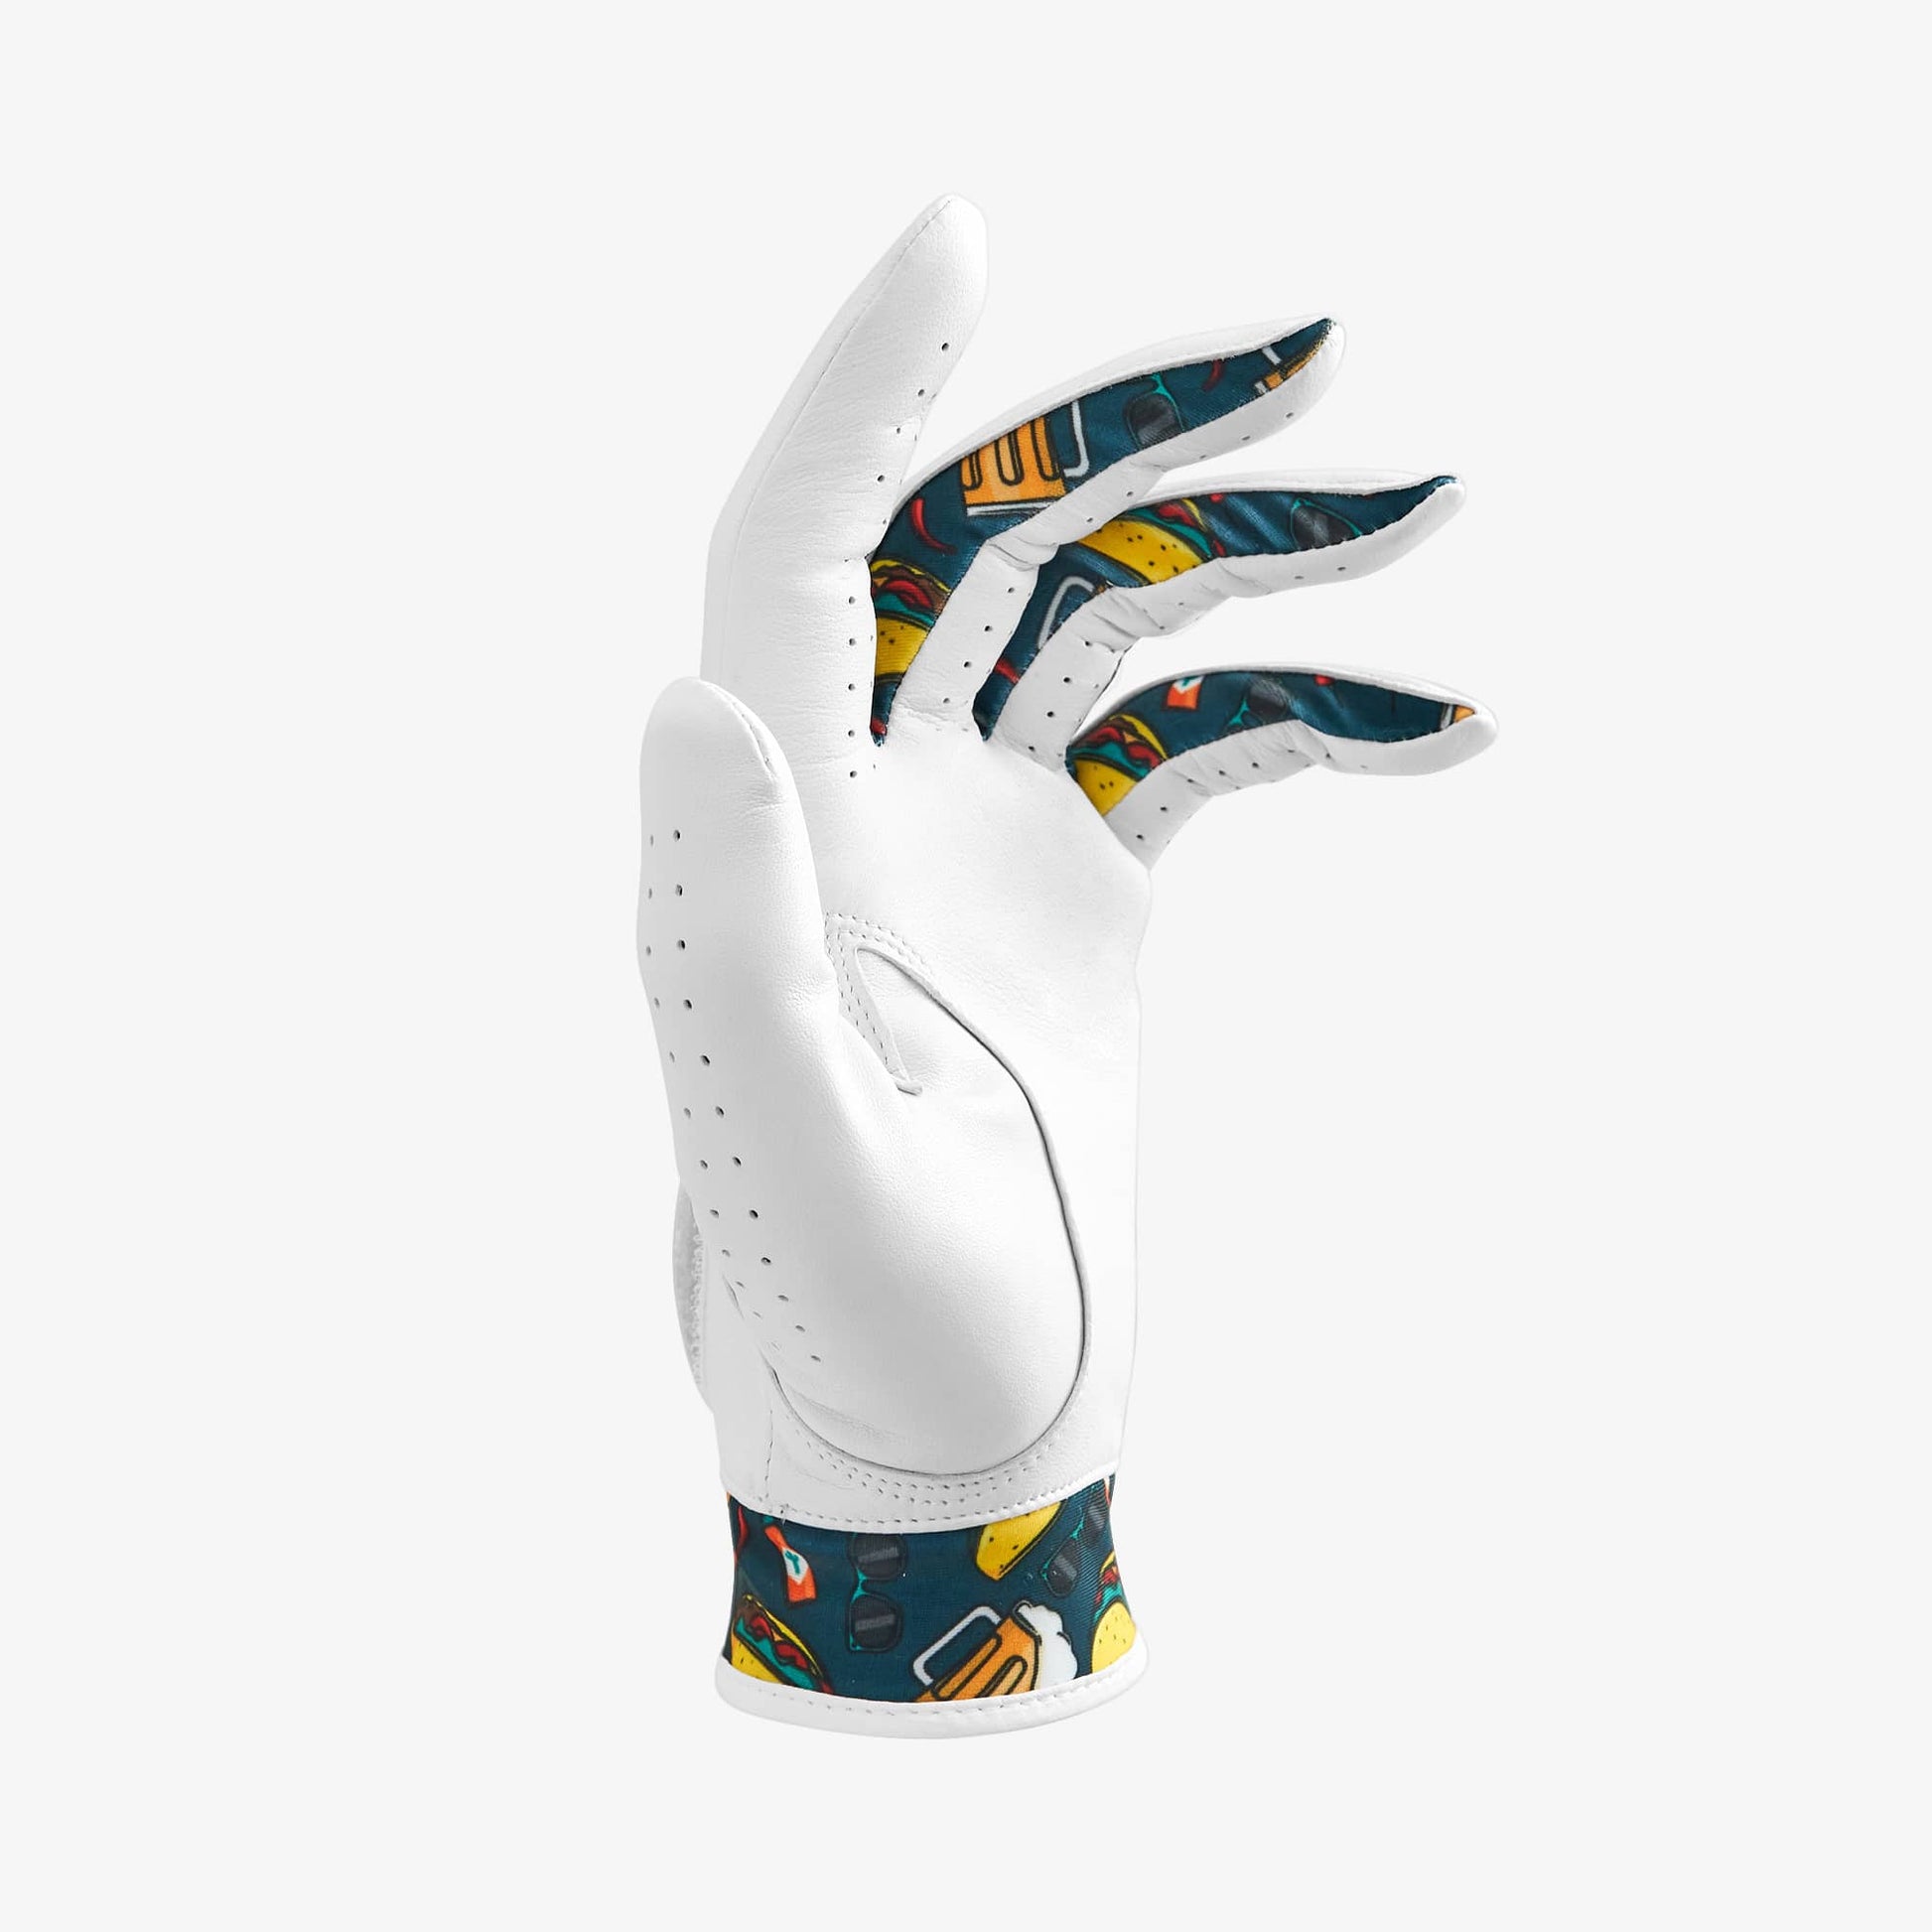 Fun golf glove with tacos design